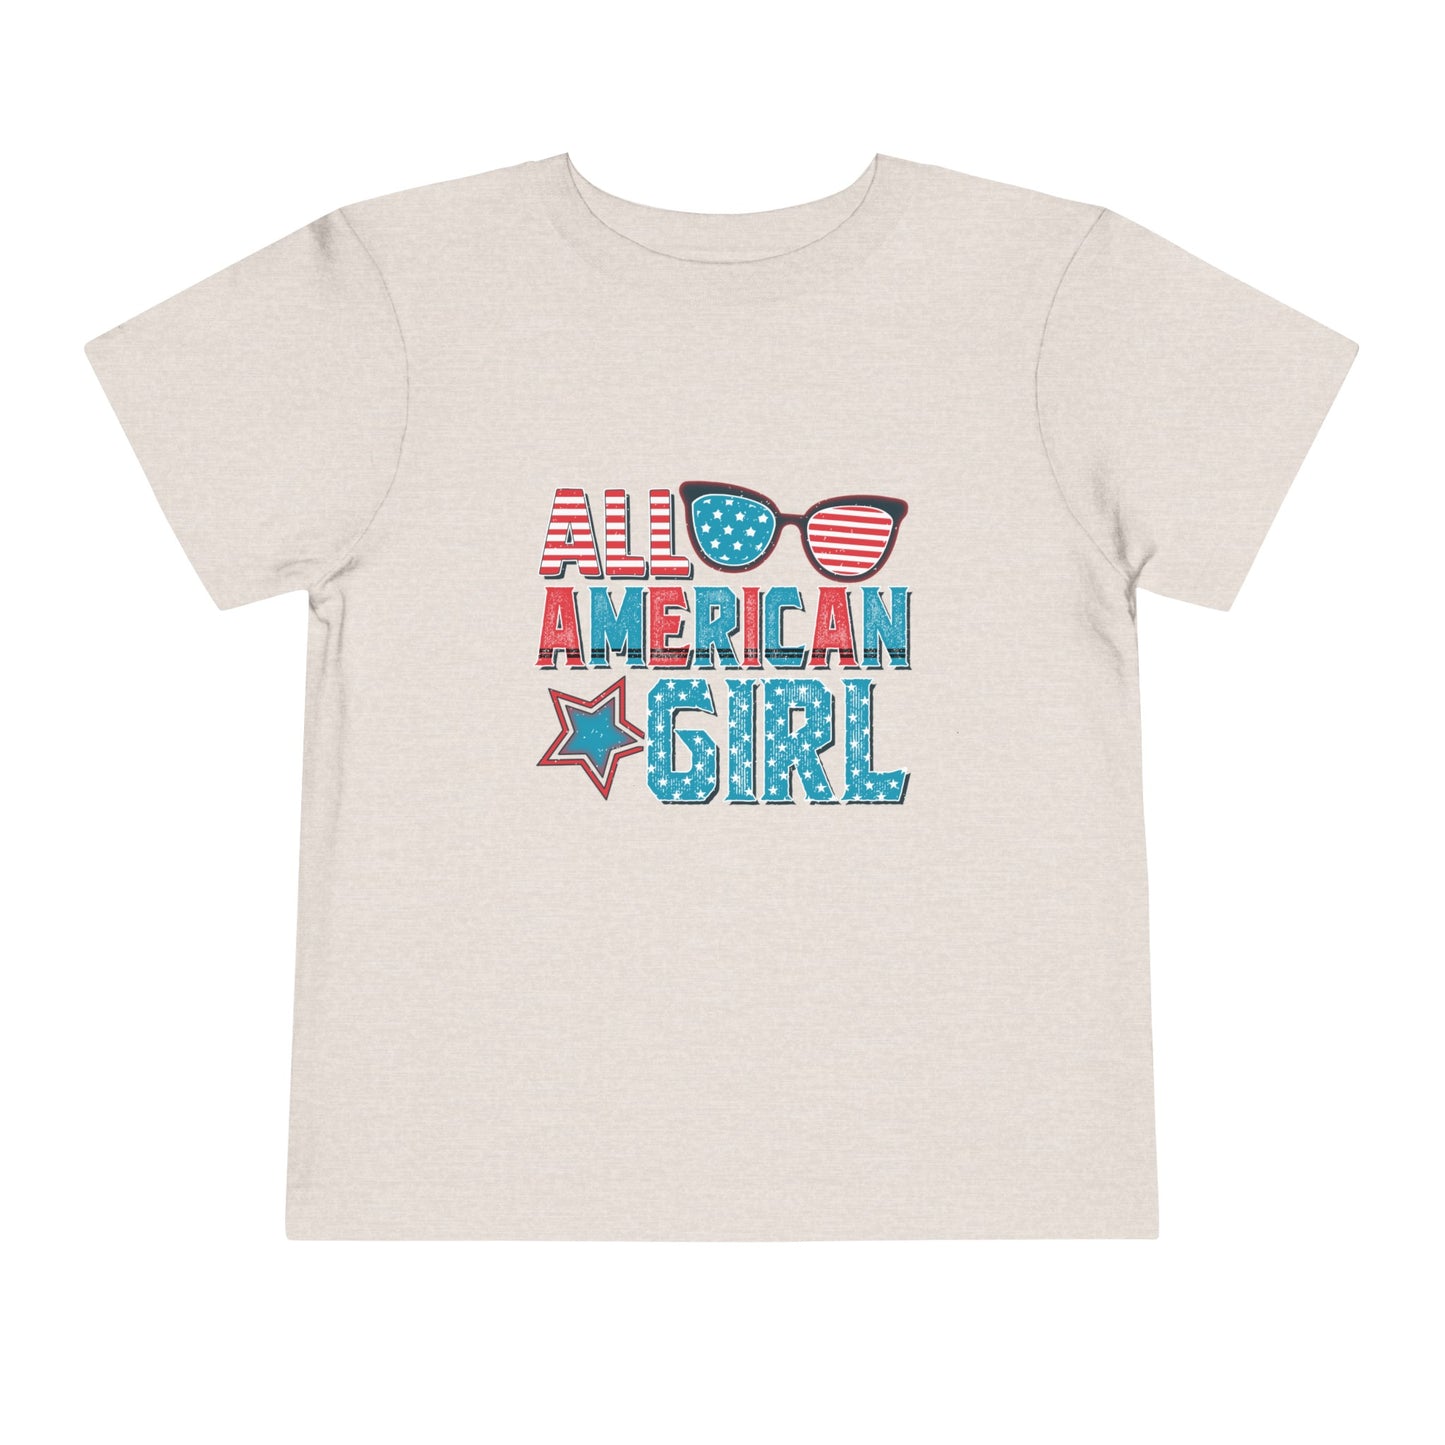 All American Toddler Girl's Short Sleeve Tee